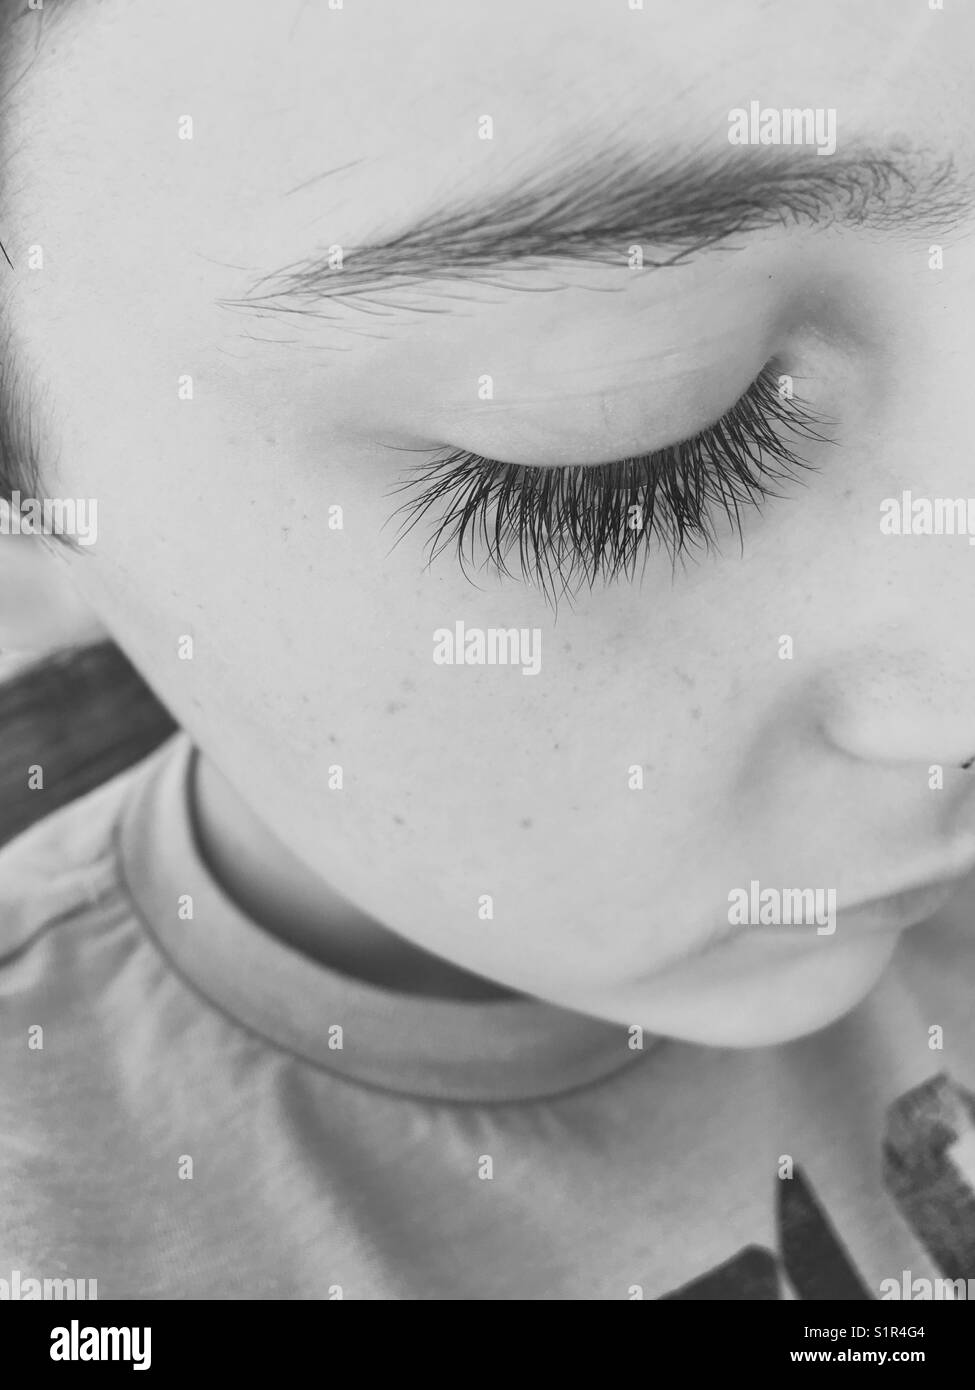 Niño con pestañas largas fotografías e imágenes de alta resolución - Alamy